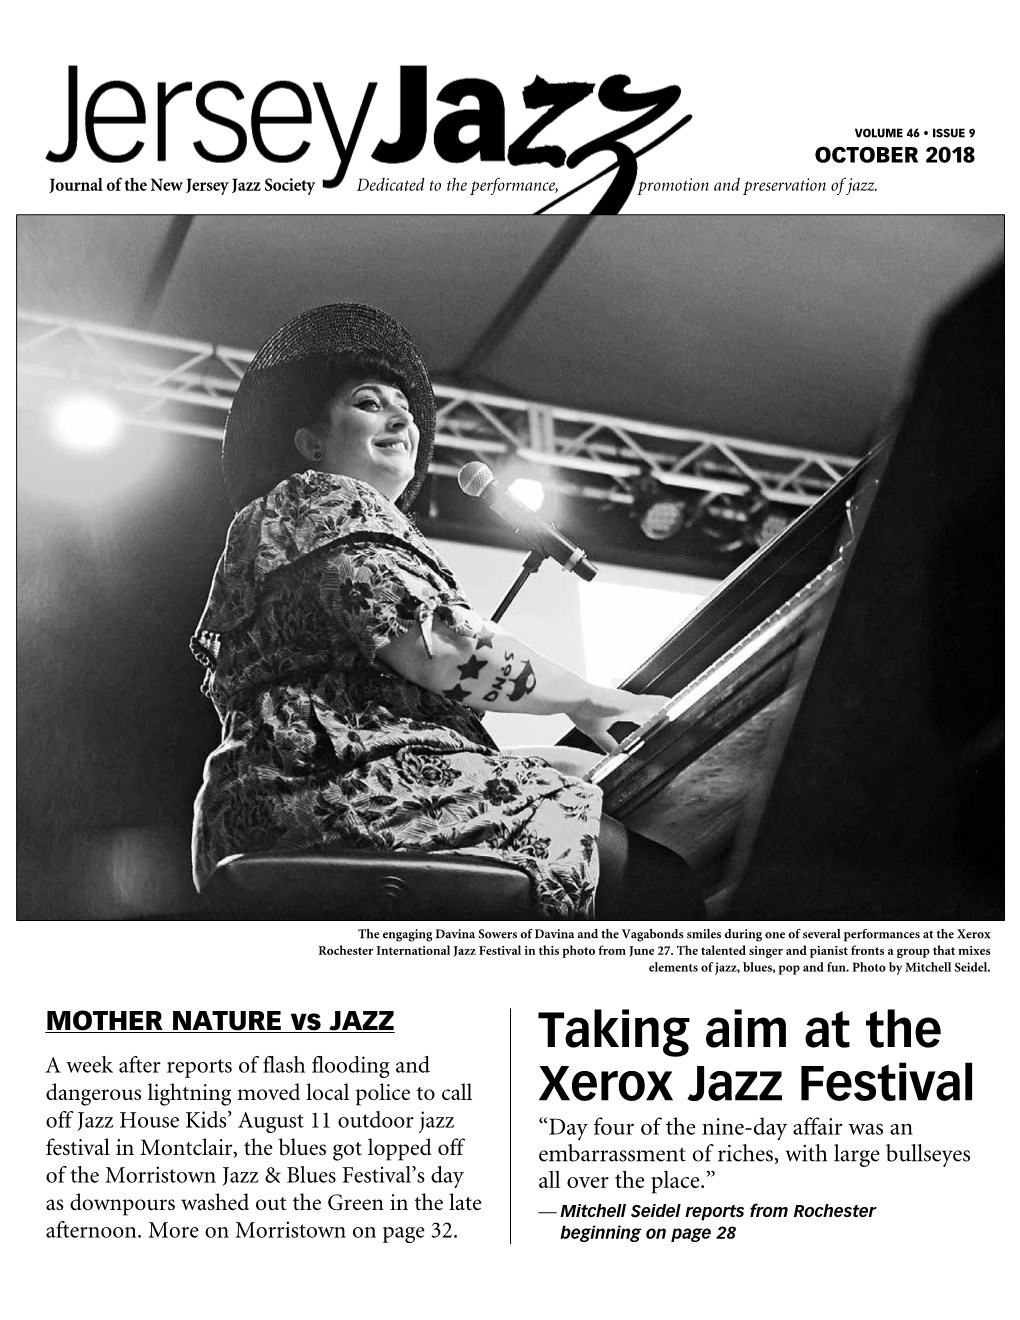 Taking Aim at the Xerox Jazz Festival